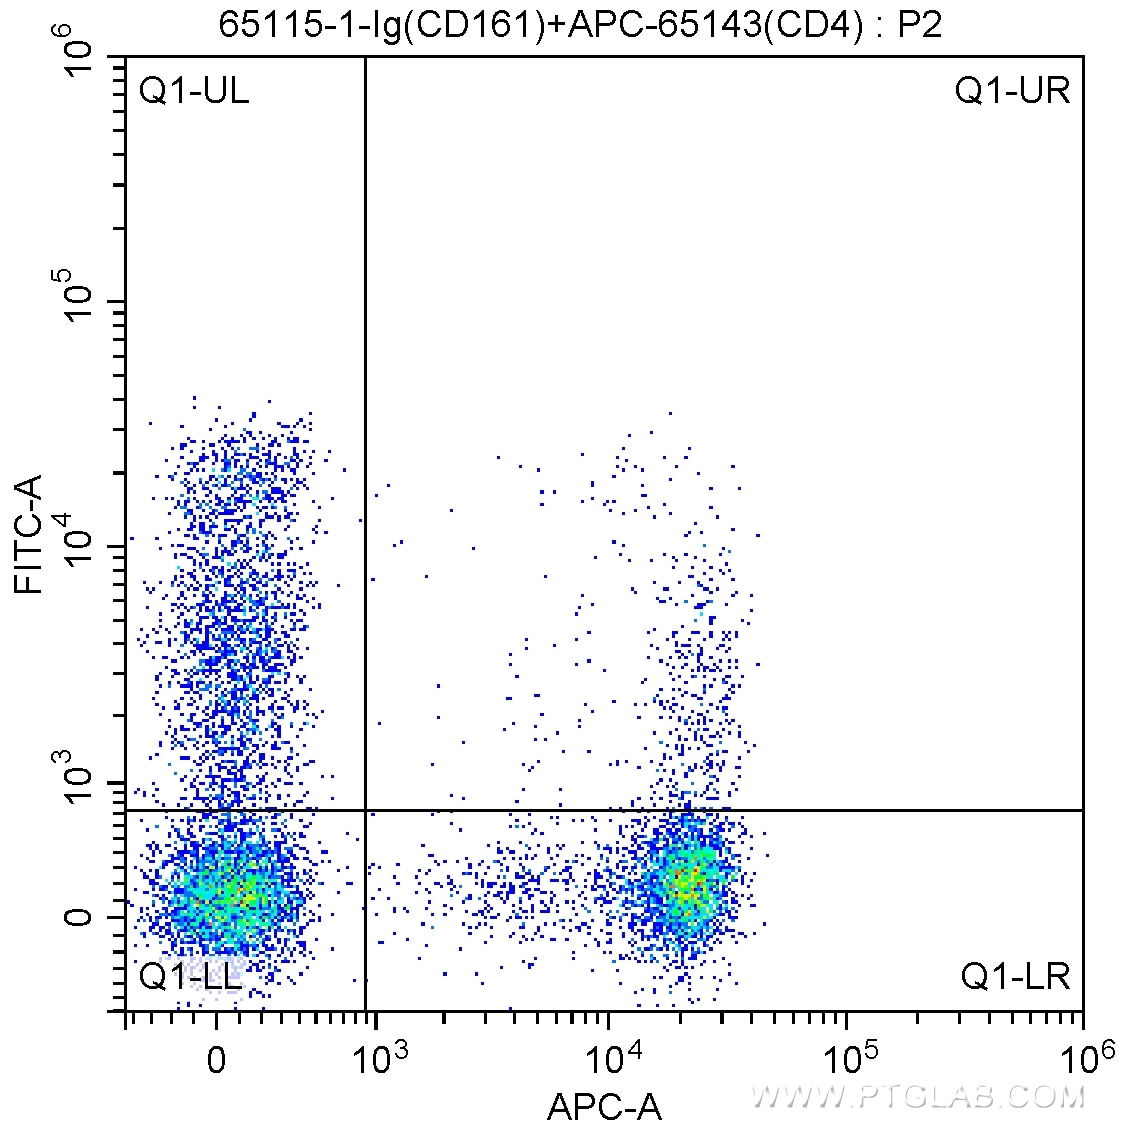 Flow cytometry (FC) experiment of human peripheral blood lymphocytes using Anti-Human CD161 (HP-3G10) (65115-1-Ig)